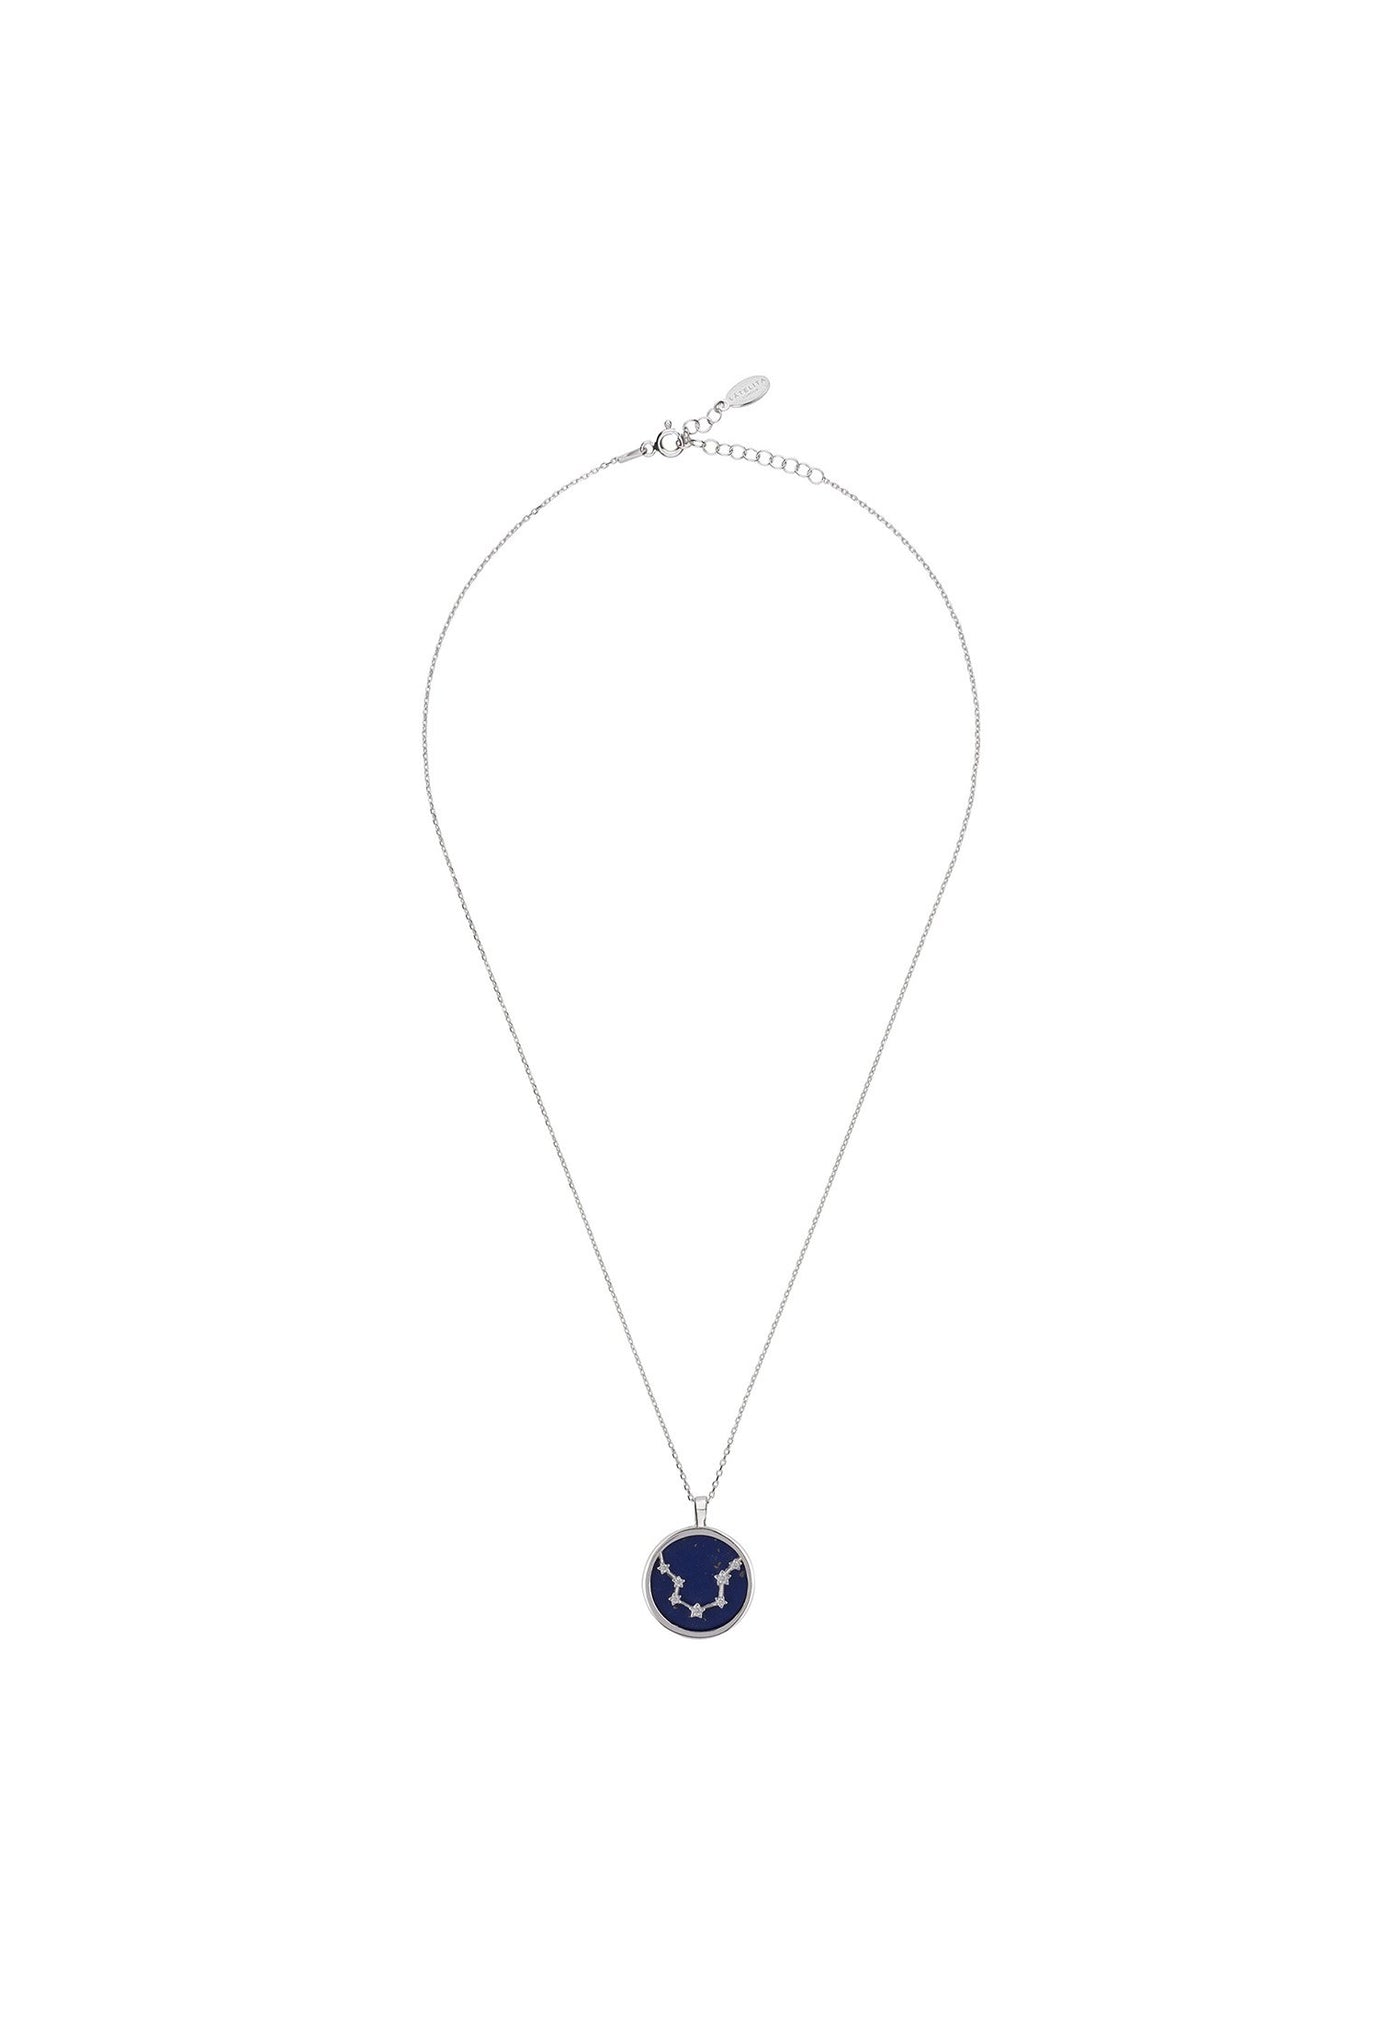 Aquarius necklace - 925 sterling silver - lapis lazuli with white zirconia